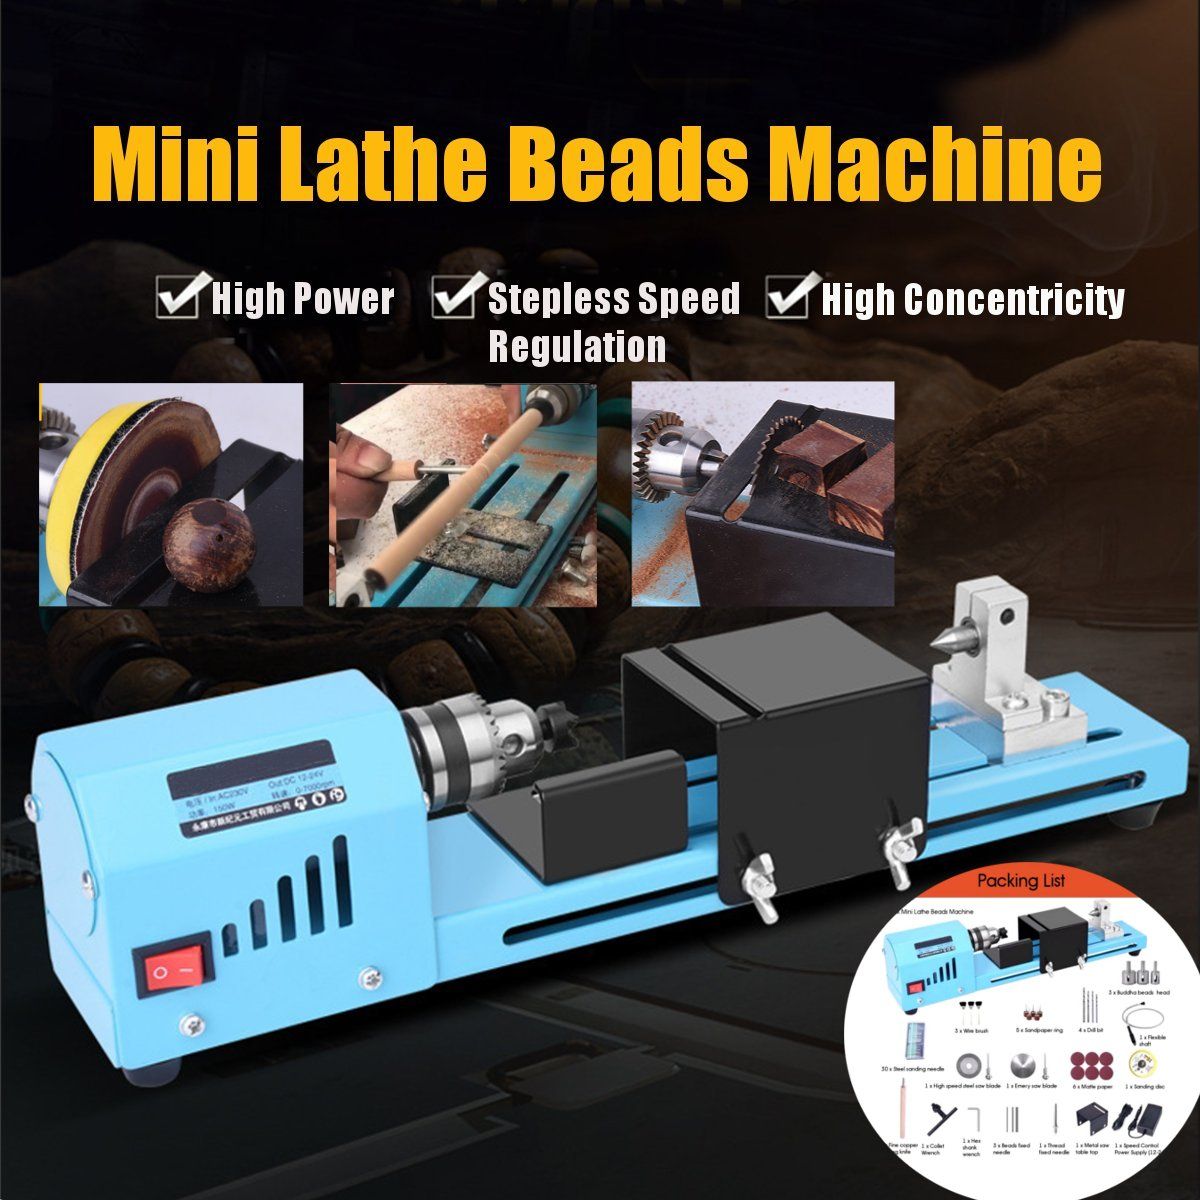 150W-Mini-Lathe-Beads-Machine-Woodworking-DIY-Lathe-Miniature-Lathe-DIY-Grinding-Polishing-Drill-Rot-1515987